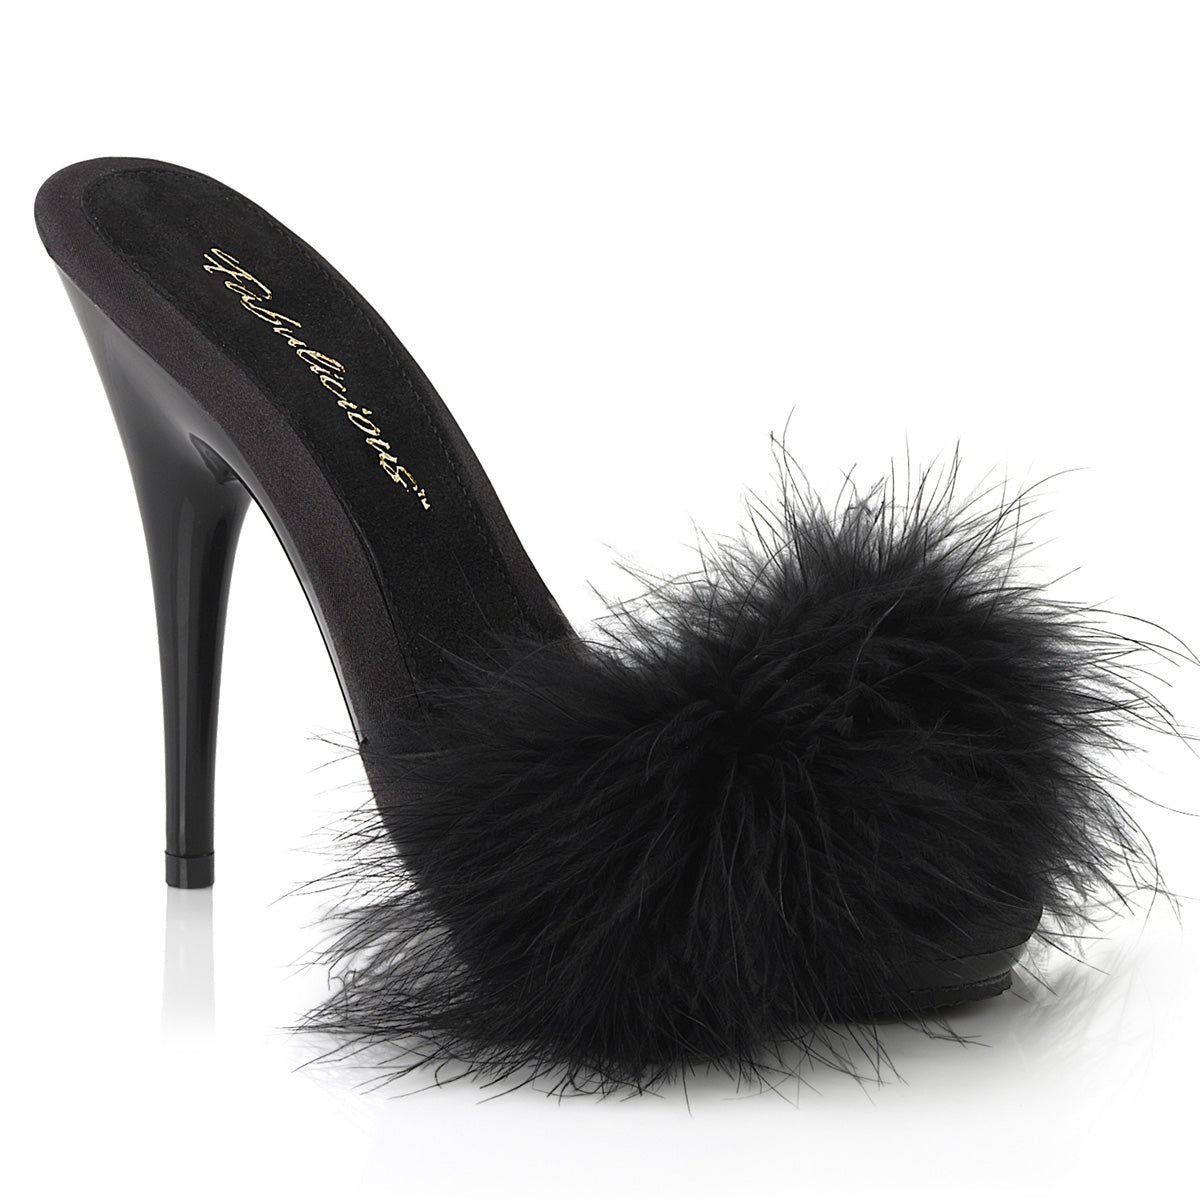 Poise-501F Fabulicious 5 inch Heel negru satin sexy pantofi